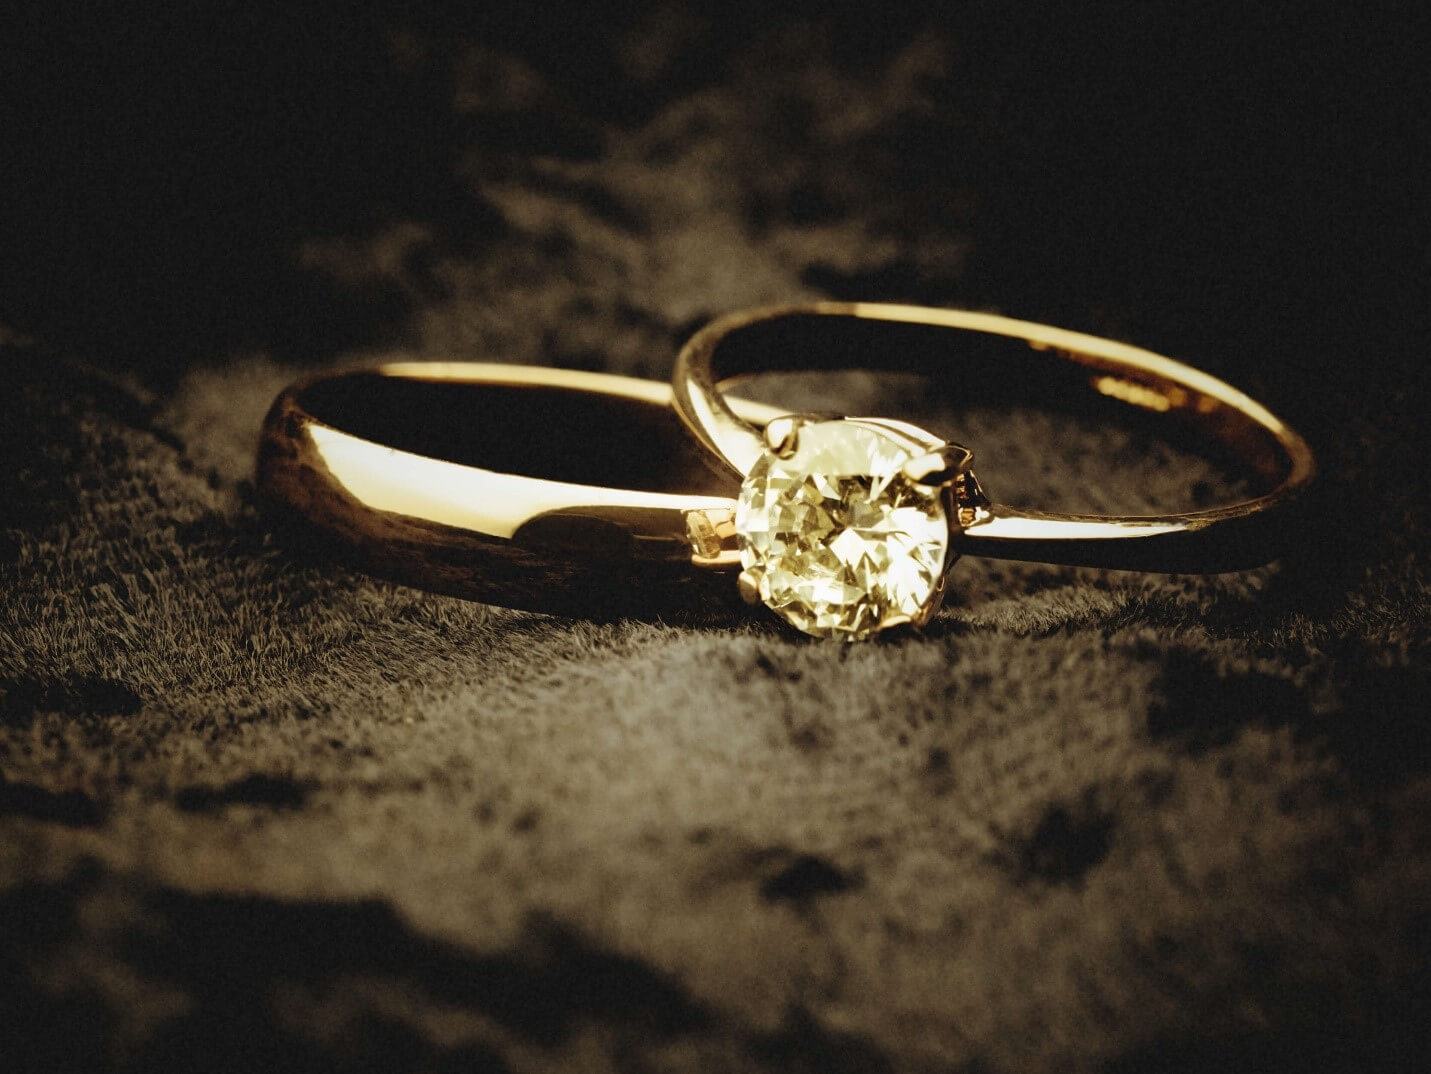 Sell Your Wedding Ring - 502-891-0424 - Genesis Diamond Buyers